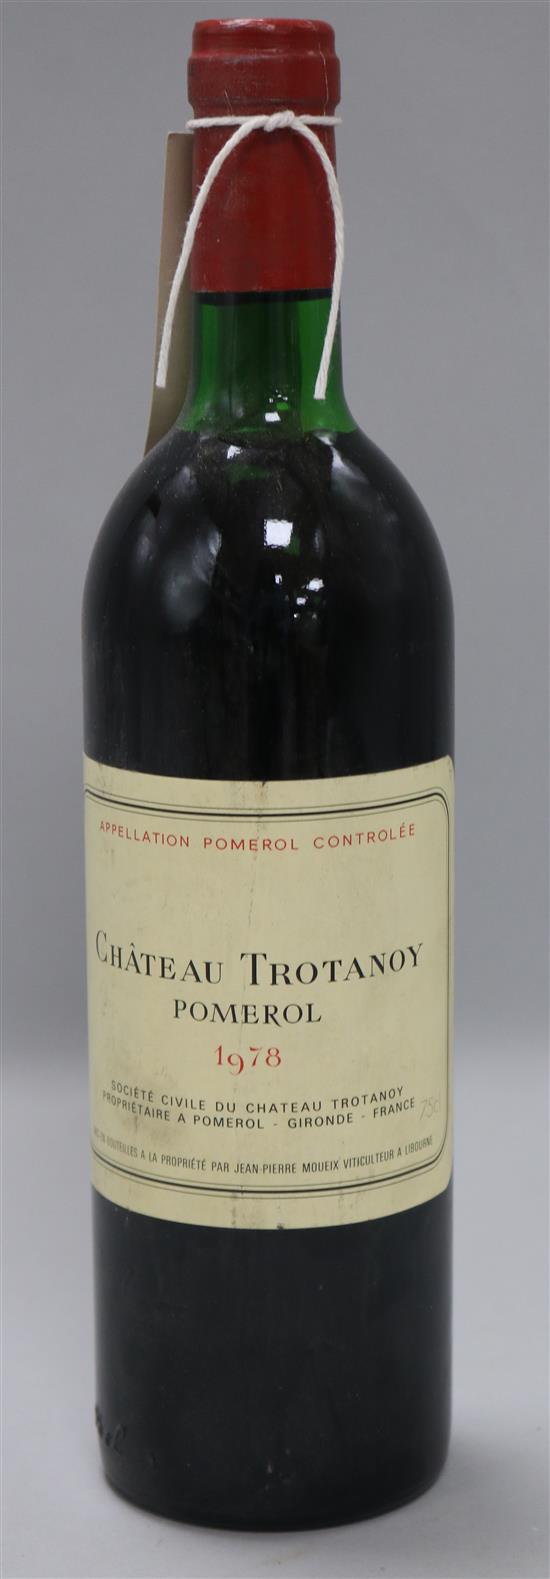 Twelve bottles of Chateau Trotanoy, Pomerol, 1978.